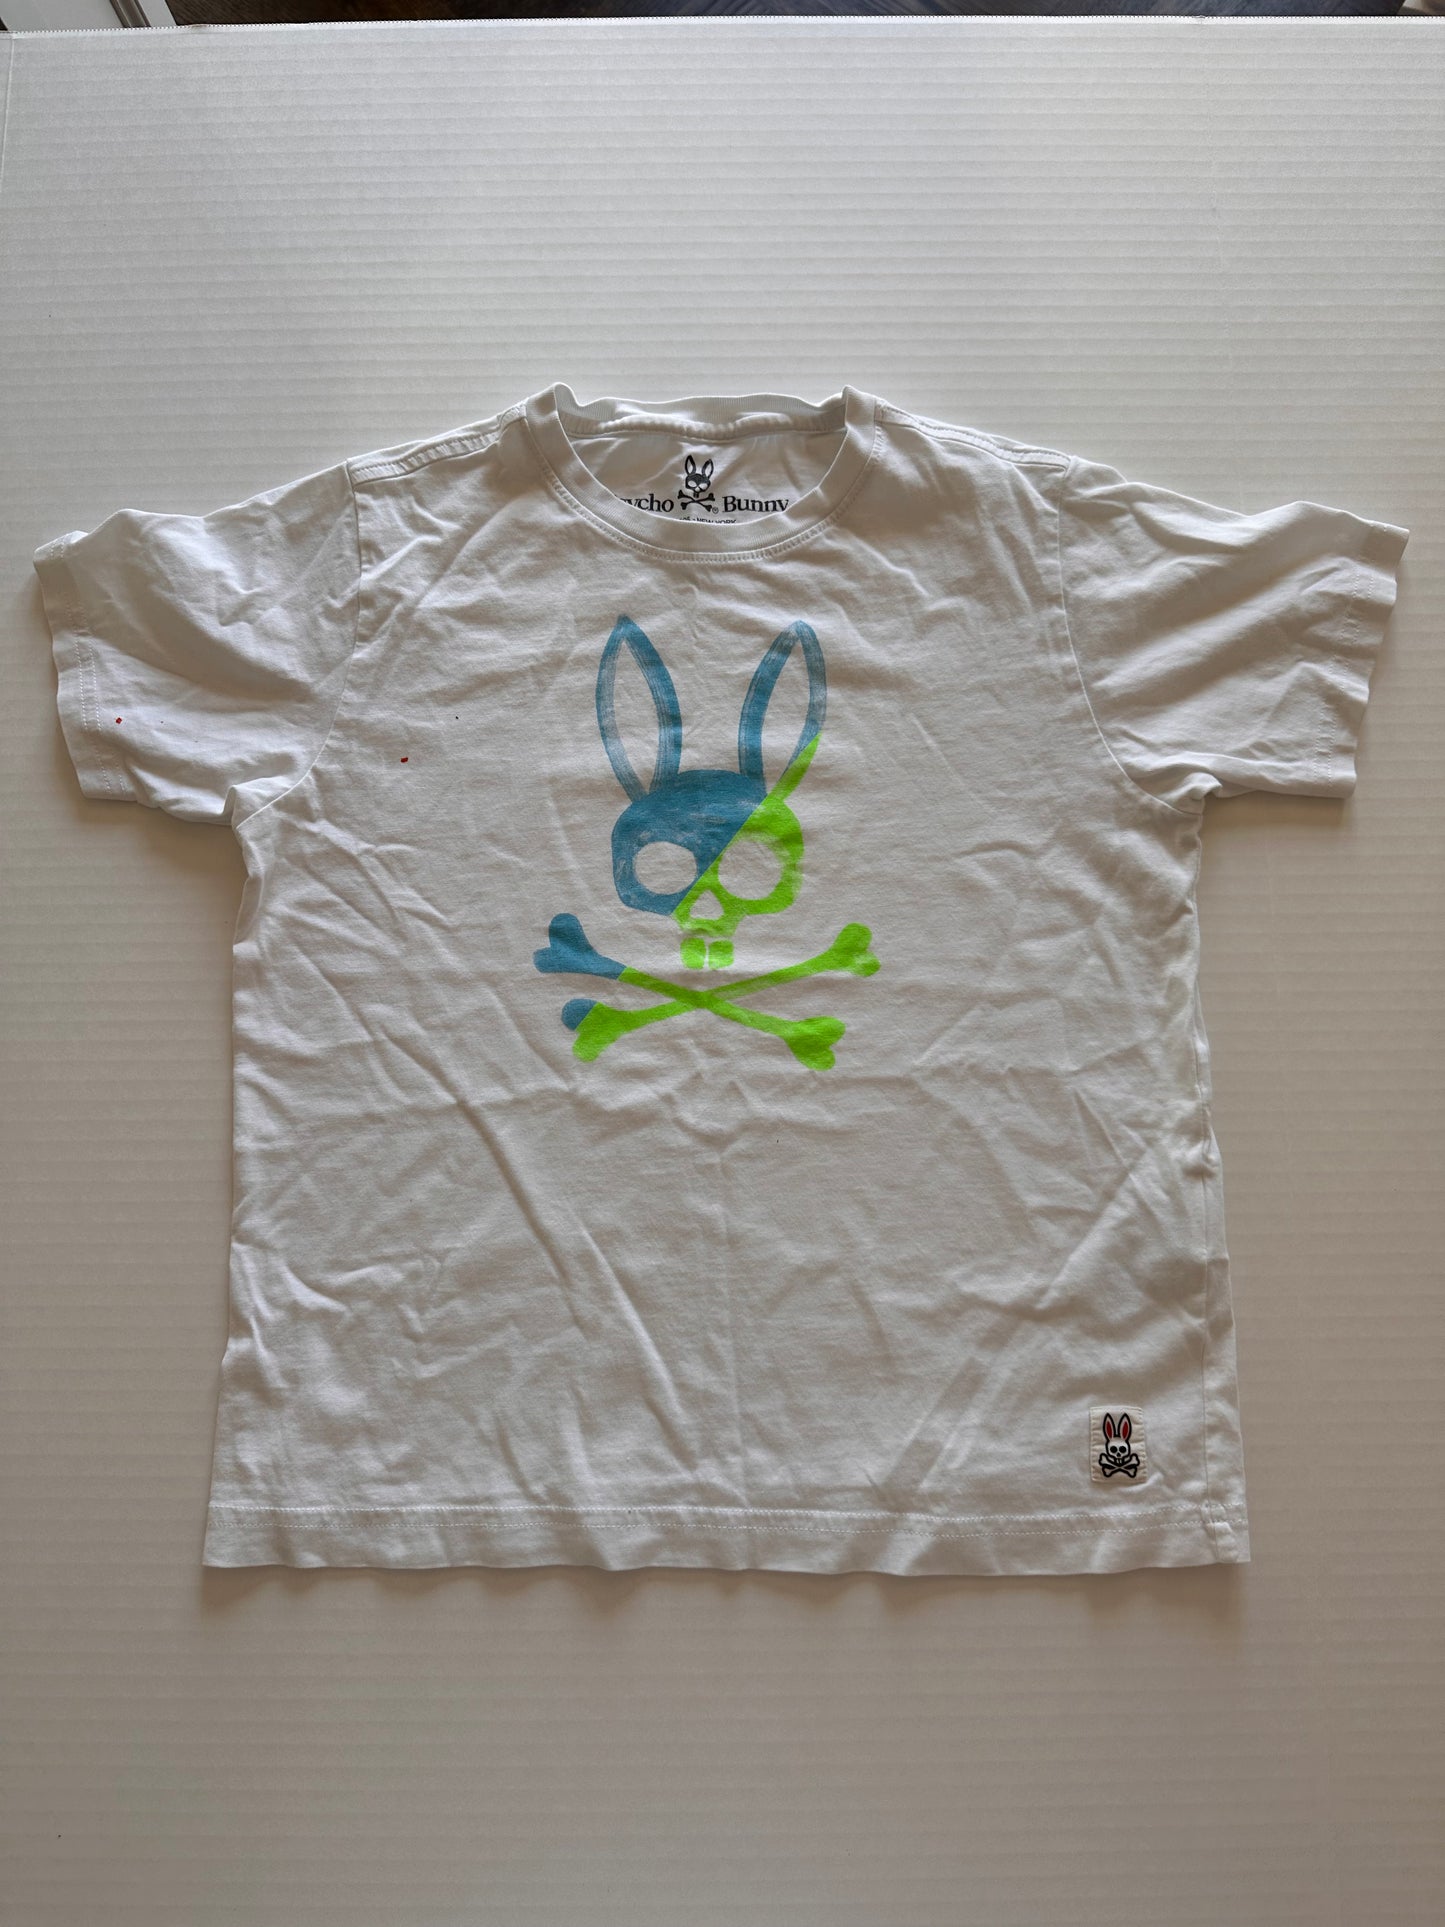 Psycho Bunny youth boys size M 10-12 t shirt